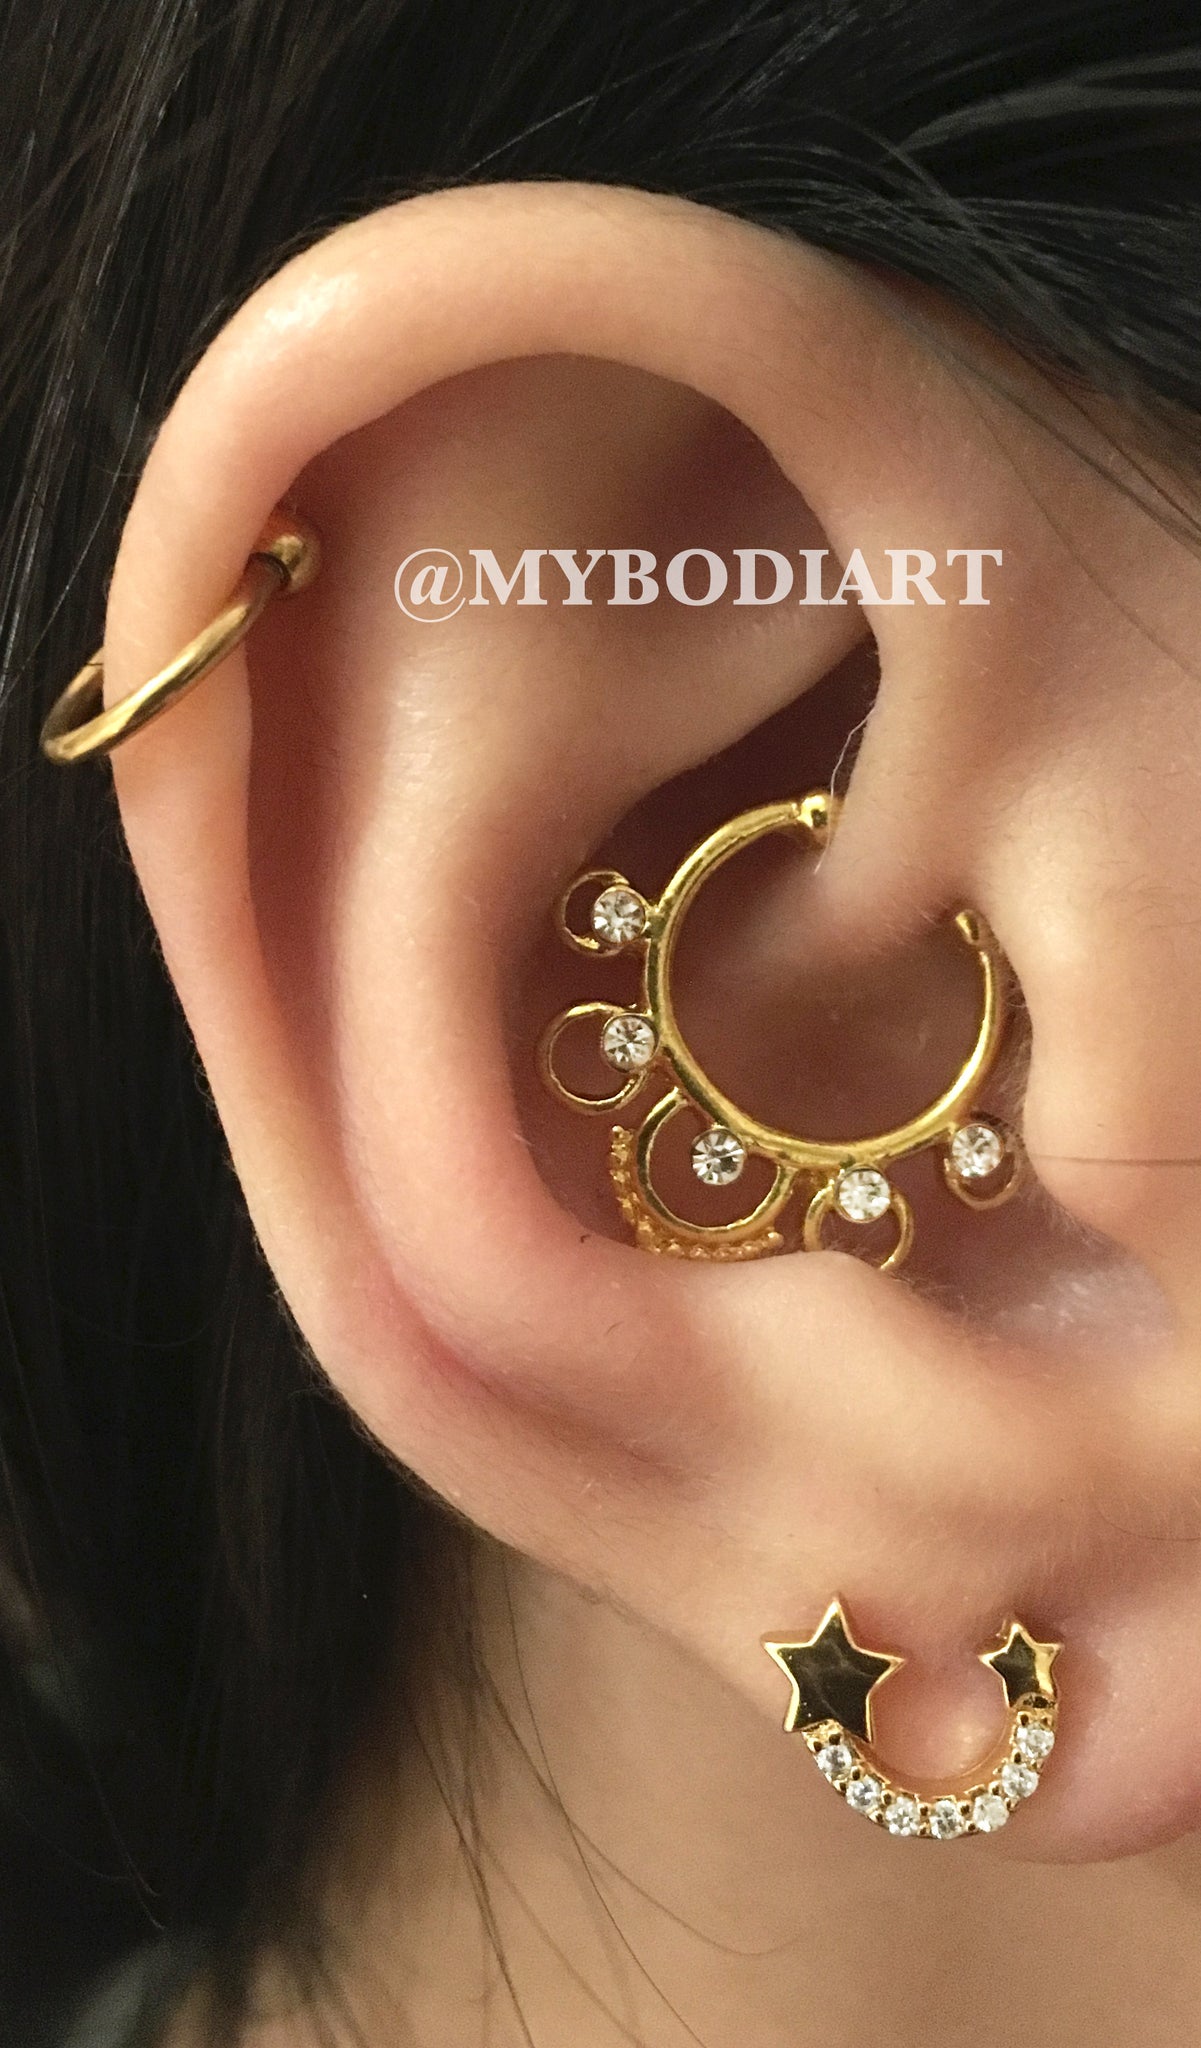 Multiple Ear Piercing Ideas - Single Gold Cartilage Ring - Rook Daith Hoop - Star Crystal Earring Lobe Stud - www.MyBodiArt.com 